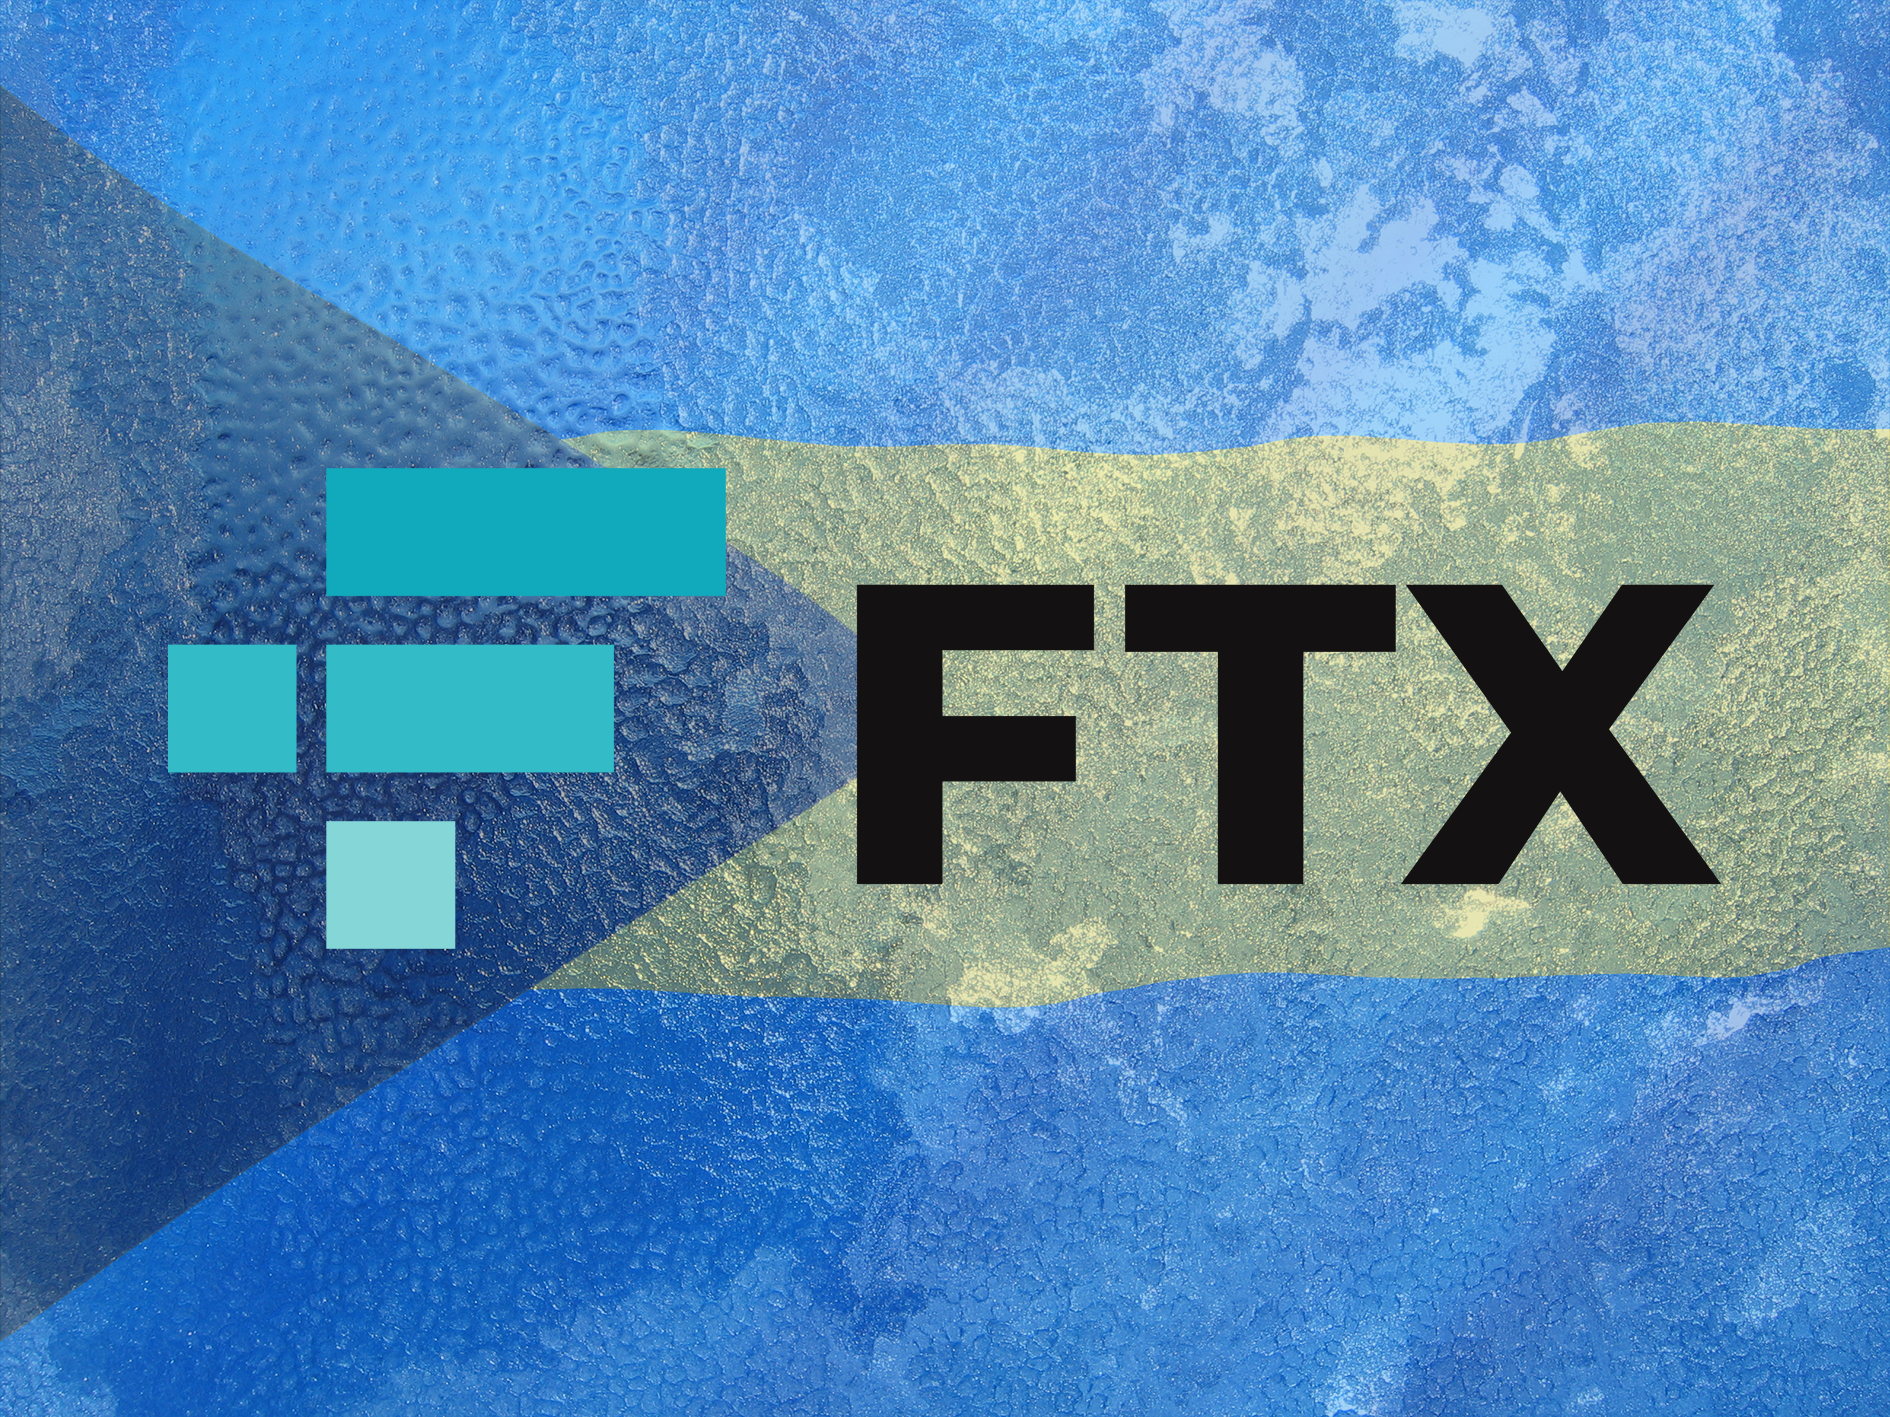 ftx logo and bahamas flag frozen